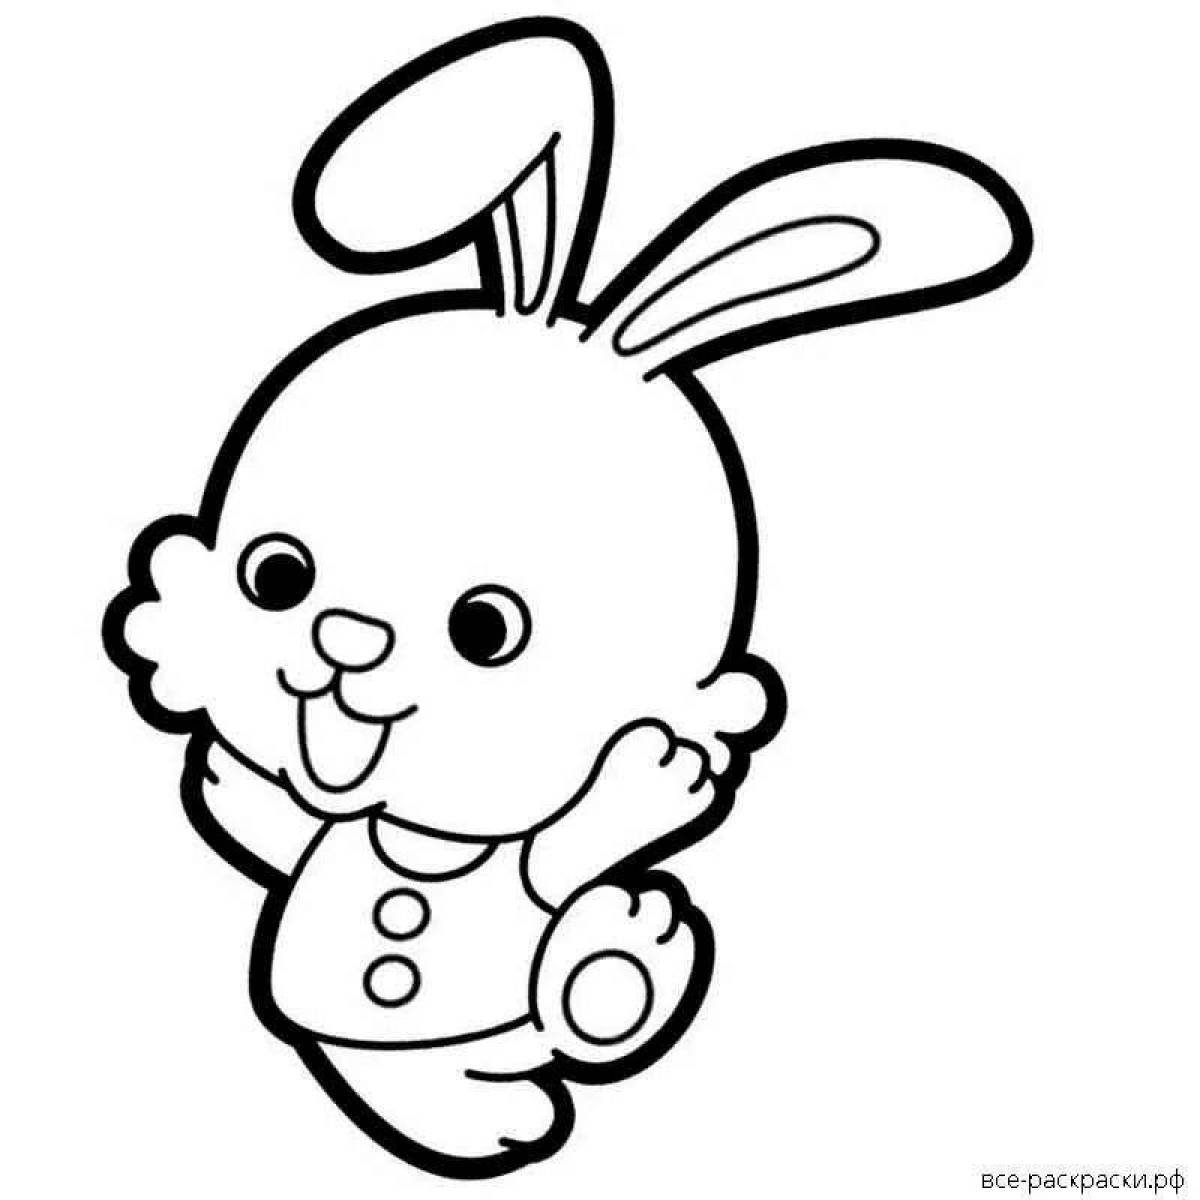 Cute bunny #4